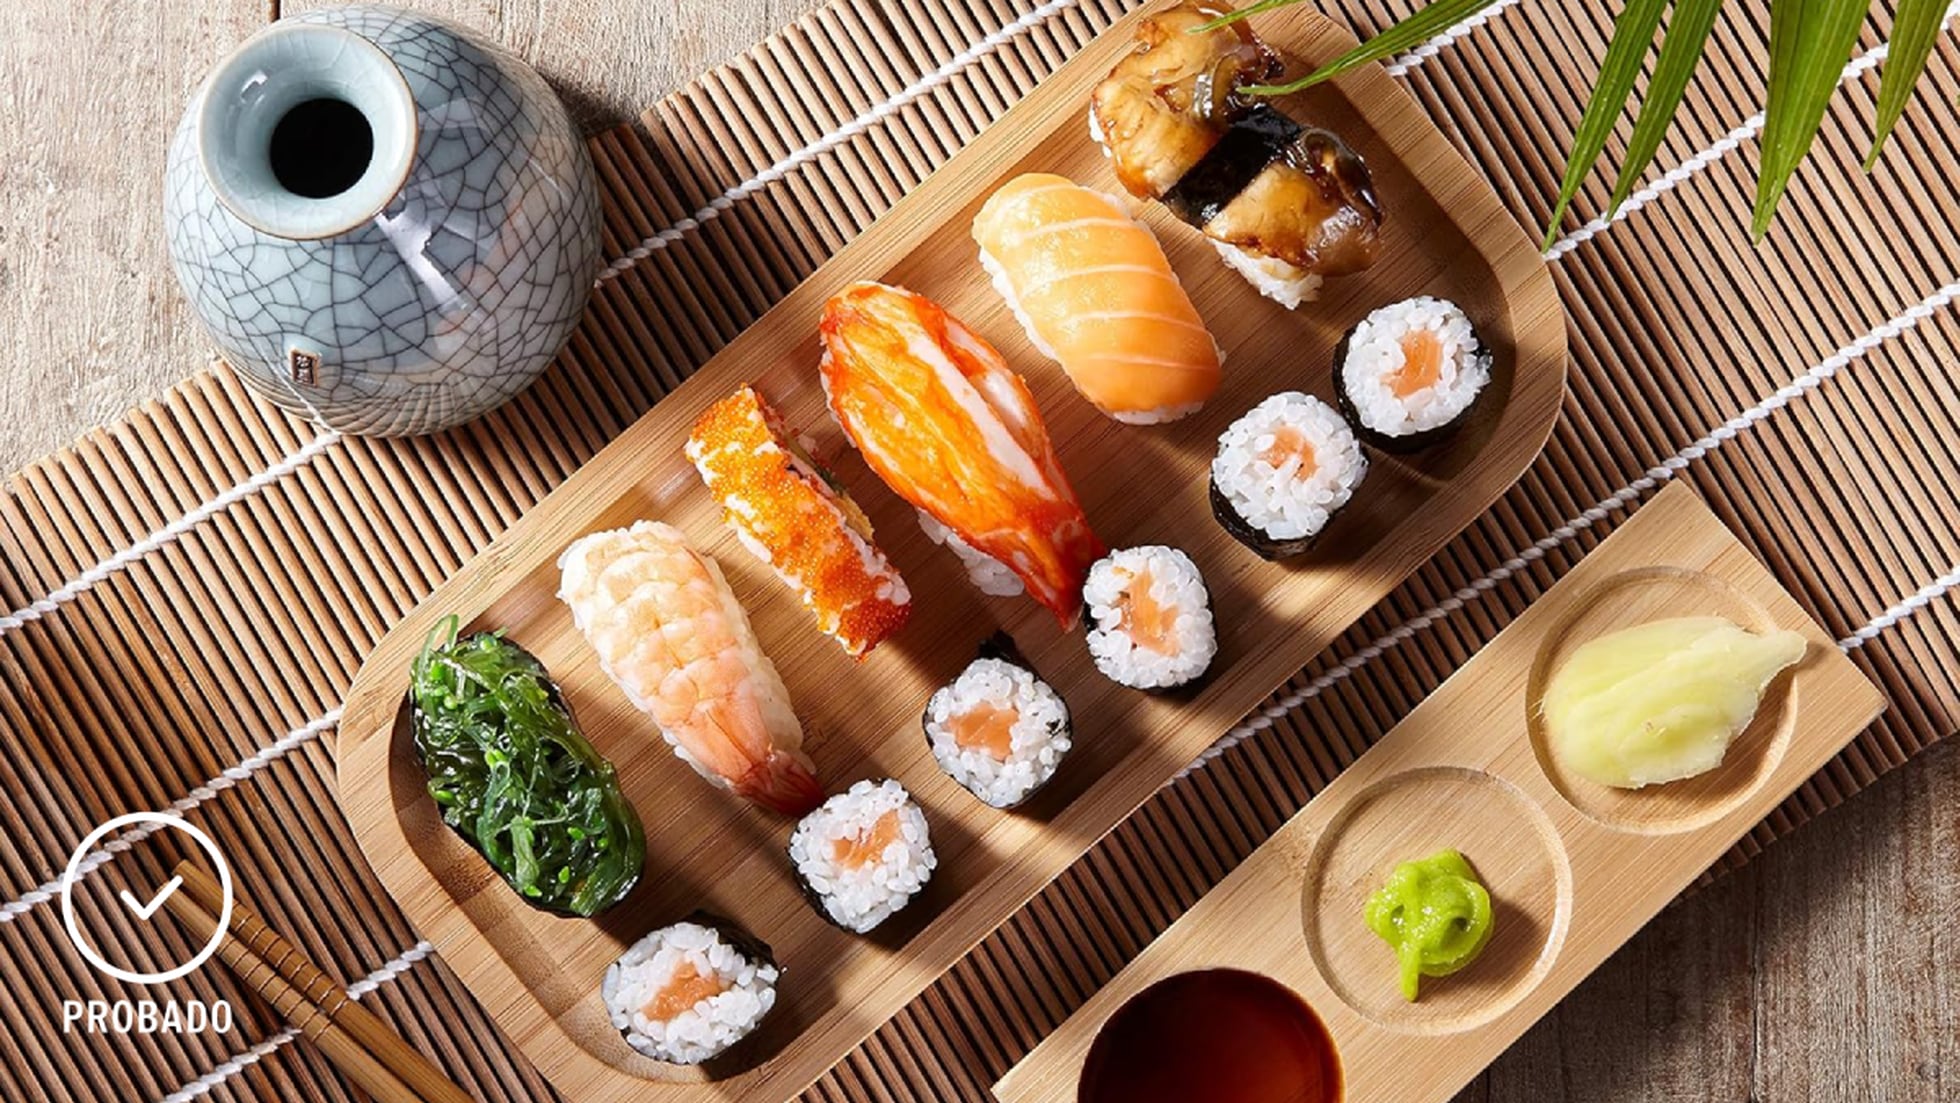 Kit de Sushi para 2 Personas